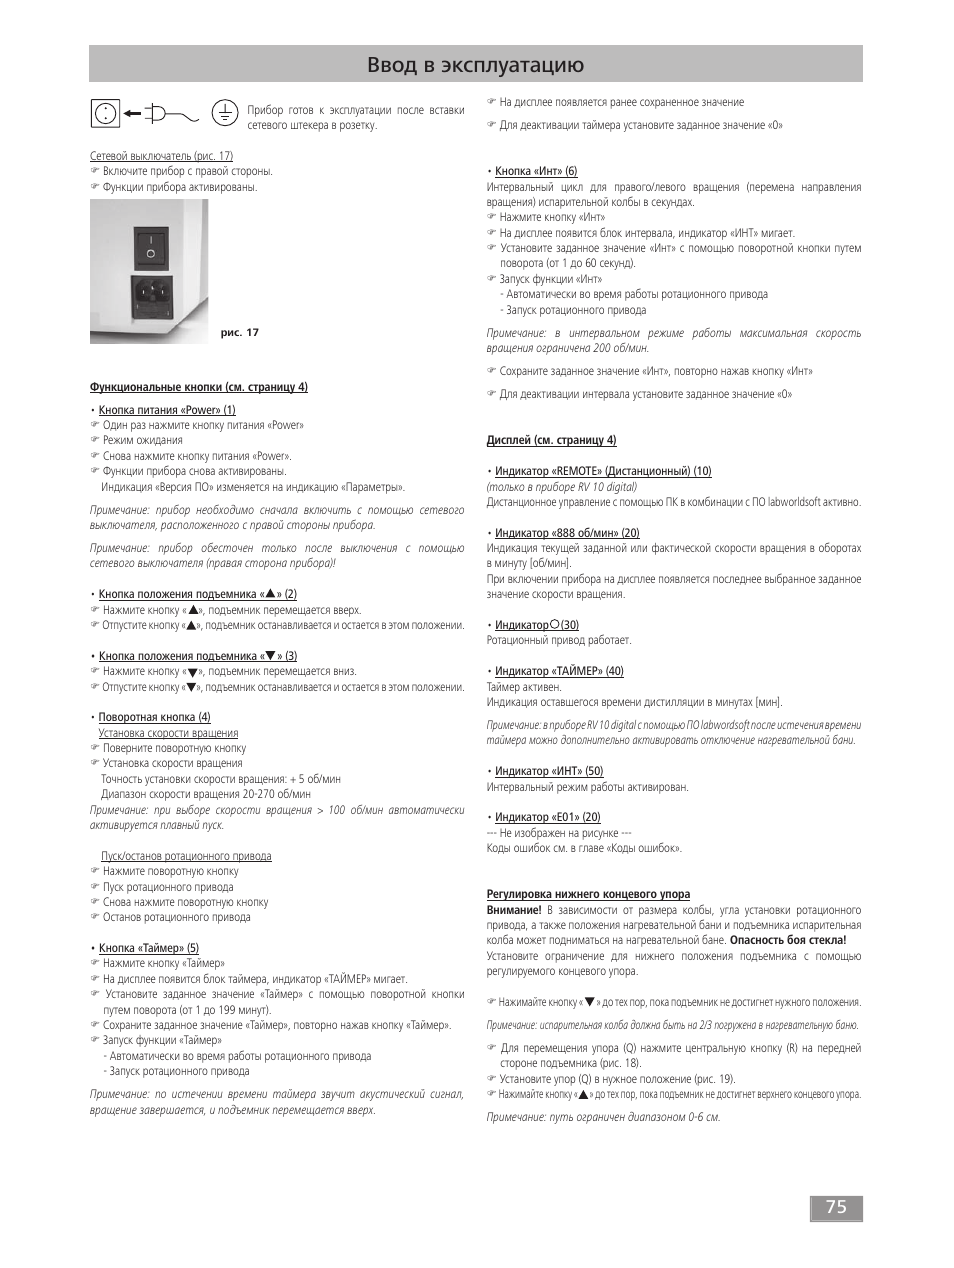 Ввод в эксплуатацию | IKA RV 10 digital FLEX User Manual | Page 75 / 84